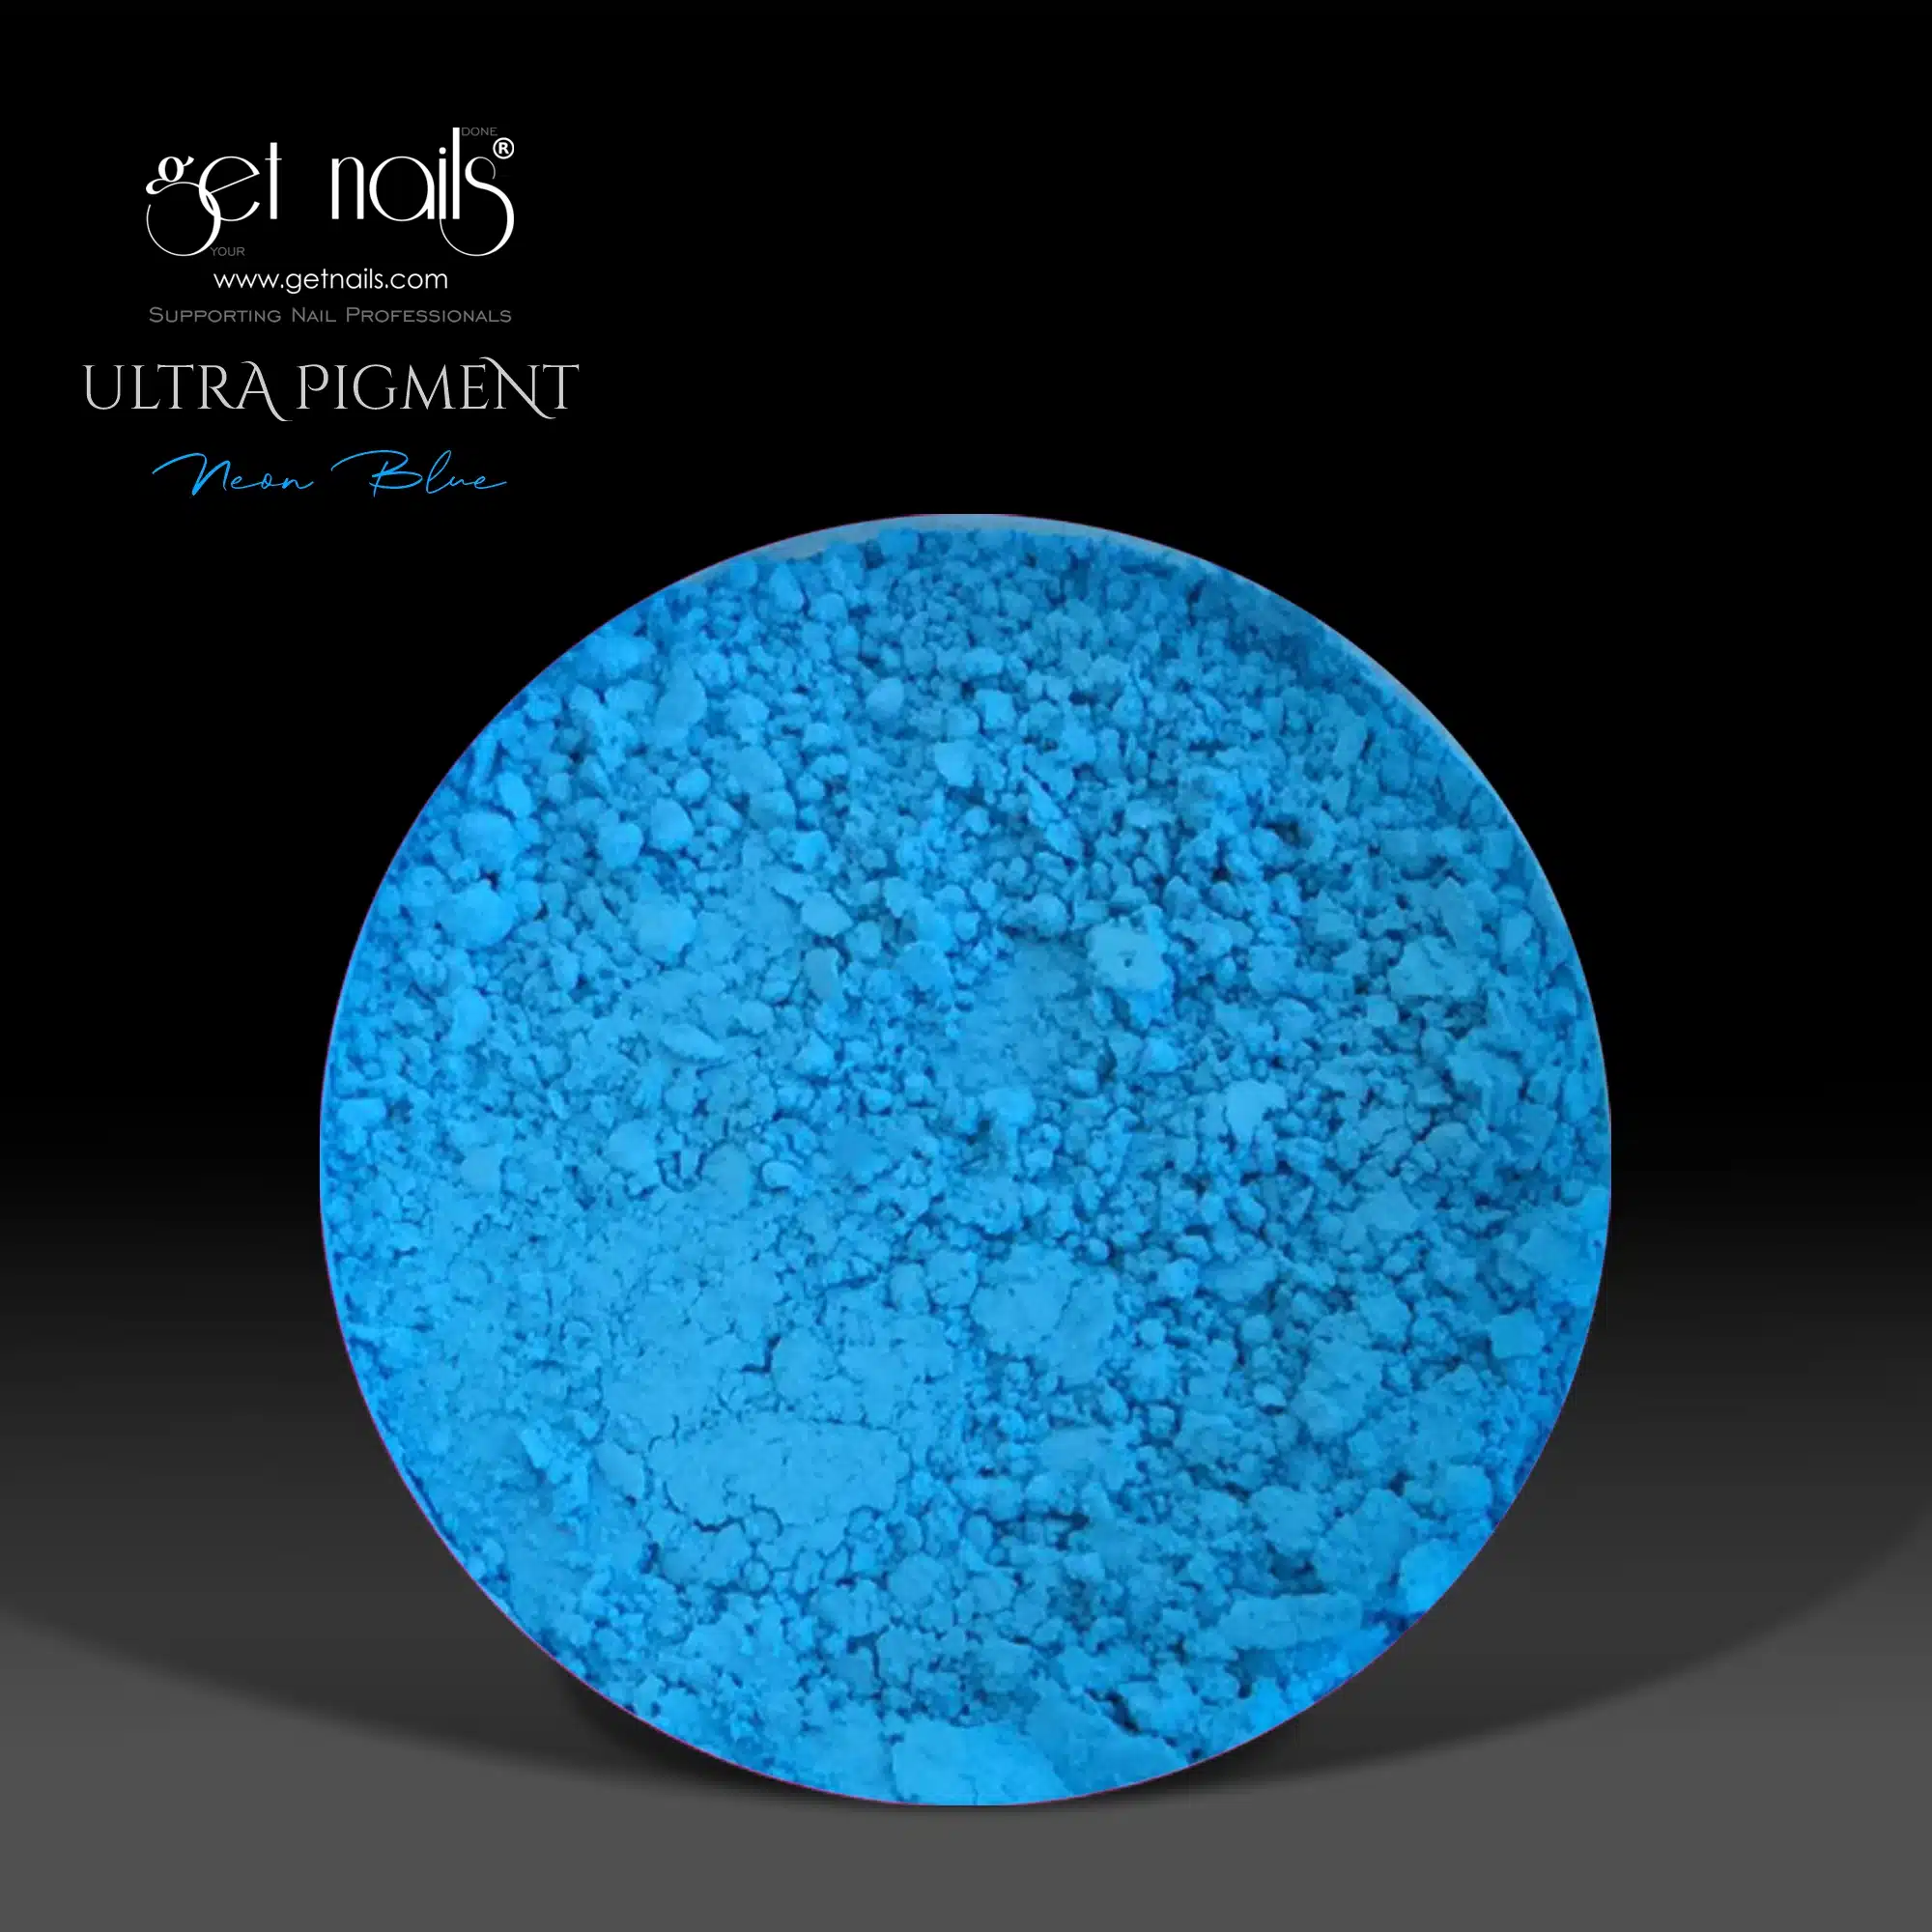 Get Nails Austria - Ultra Pigment Neon Blue 1.5 g